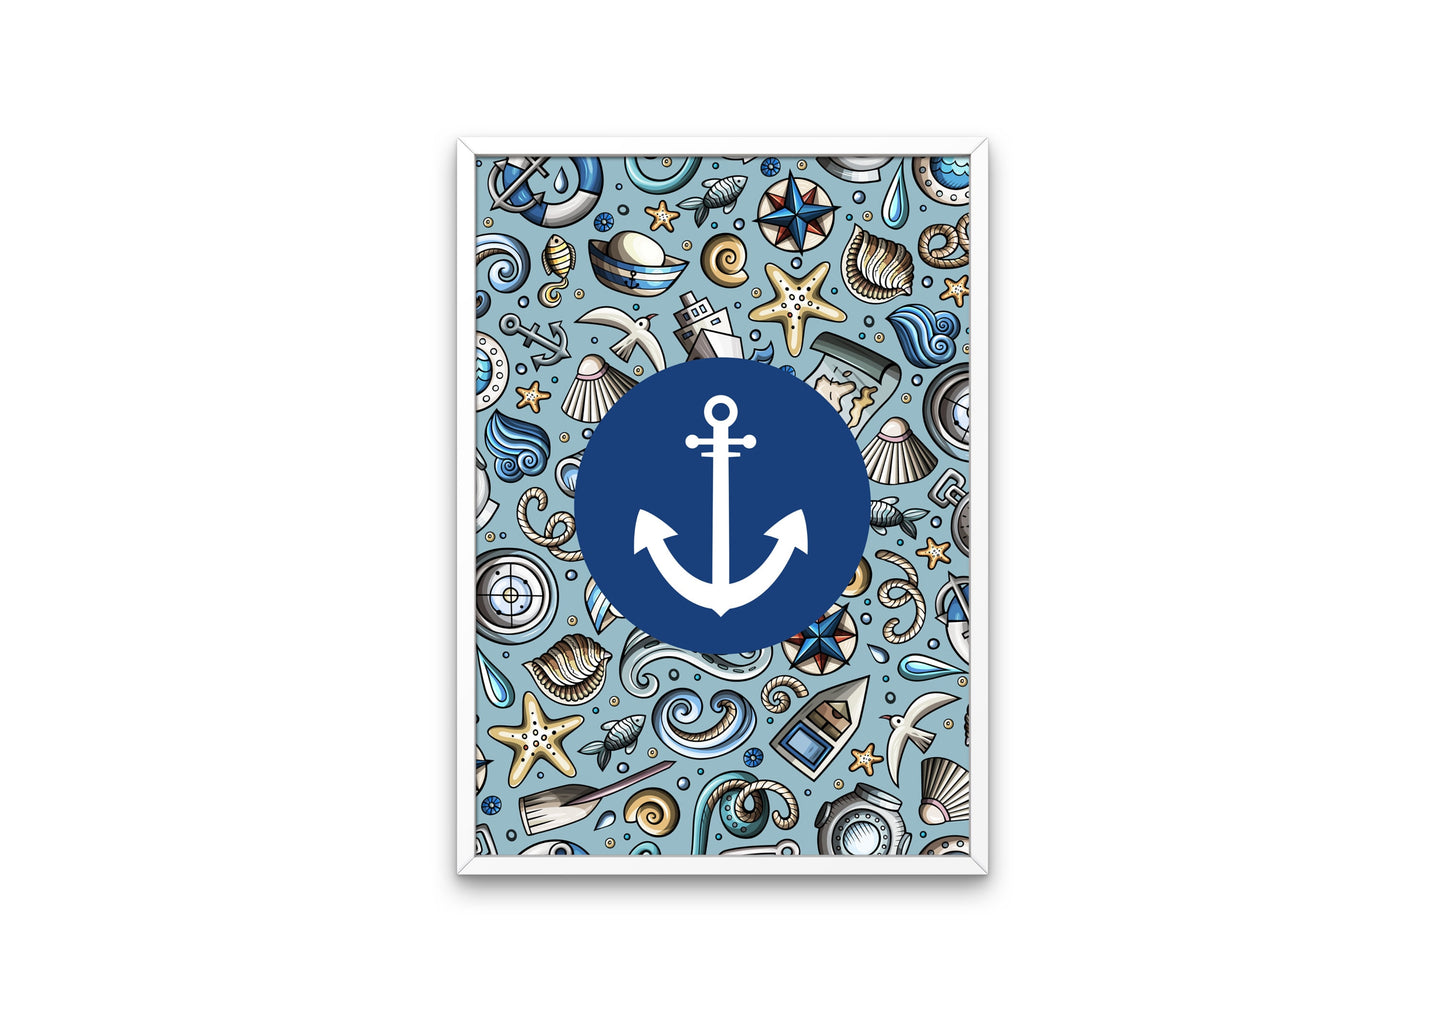 Anchor Wall Décor DIGITAL PRINT, Coastal Poster Print, Nautical Wall Art, Beach house décor, Boho coastal decor, Seaside print, Navy blue